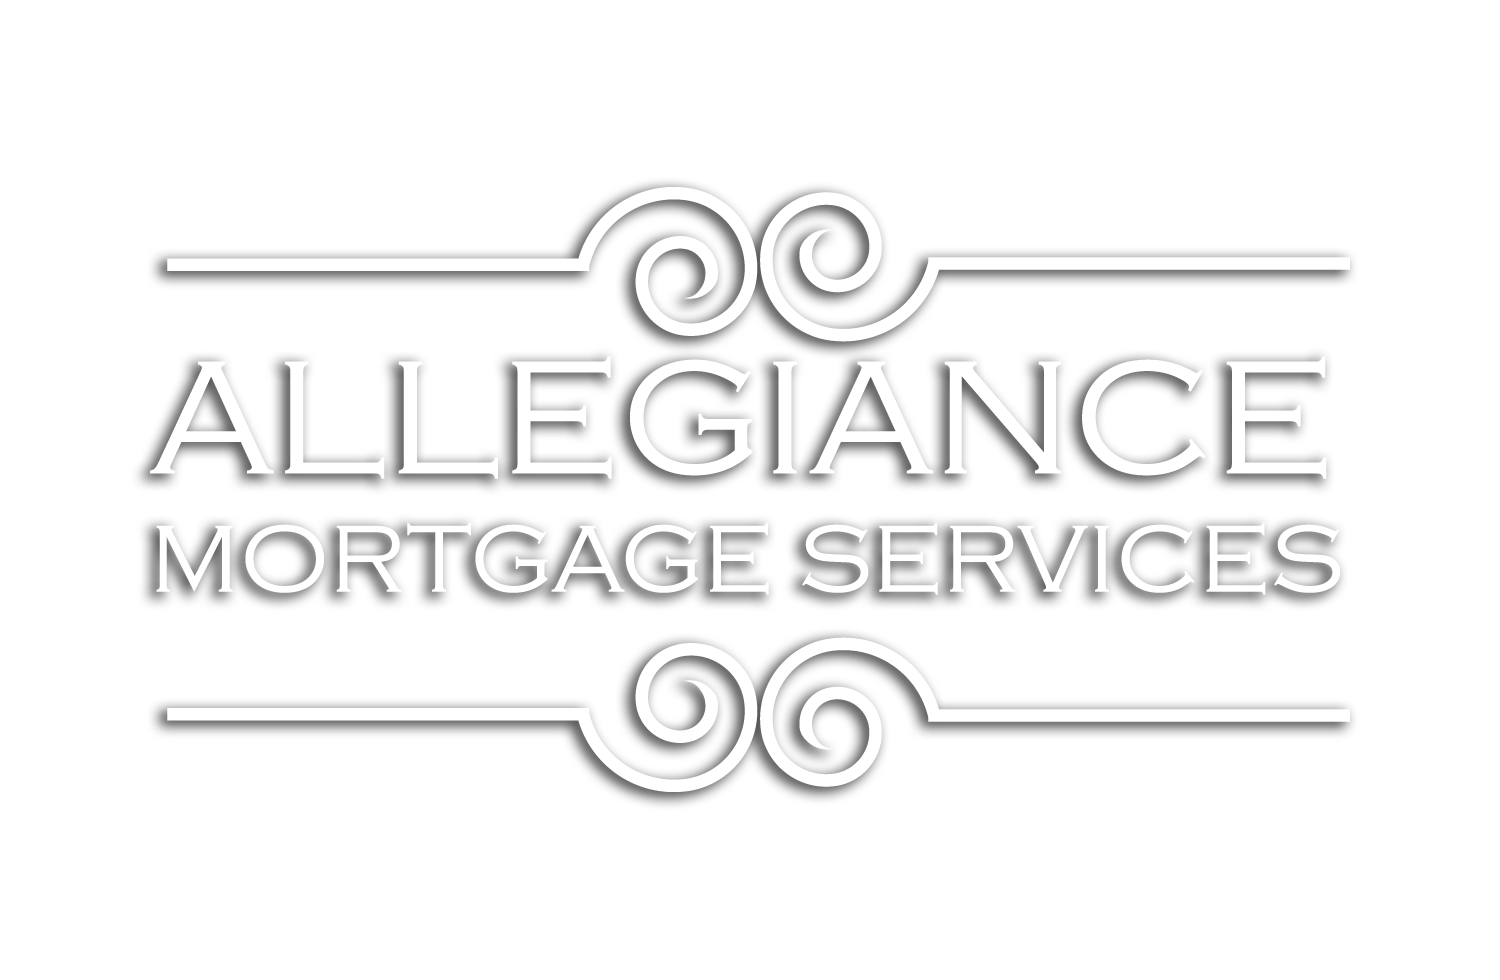 Allegiance Mortgage